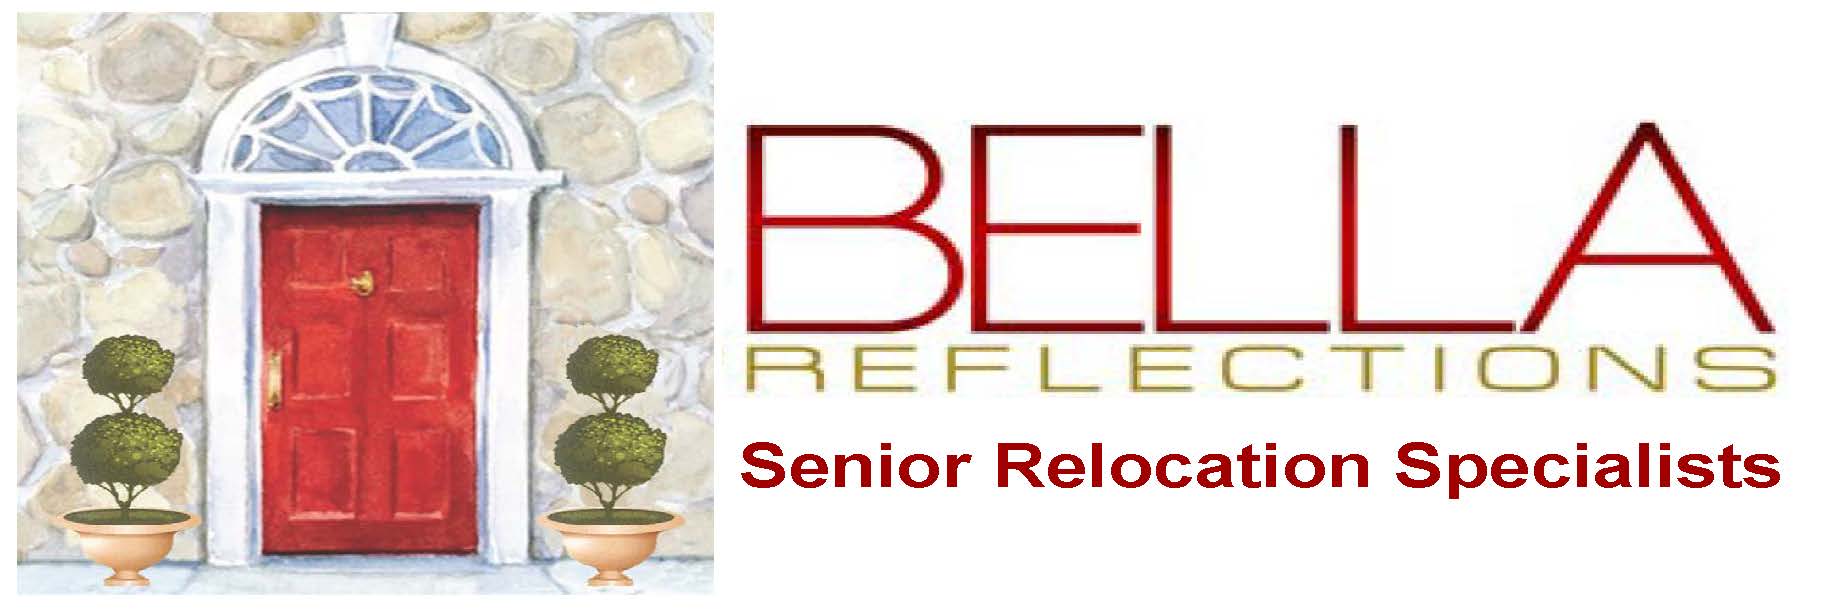 Bella Reflections Seniors Logo